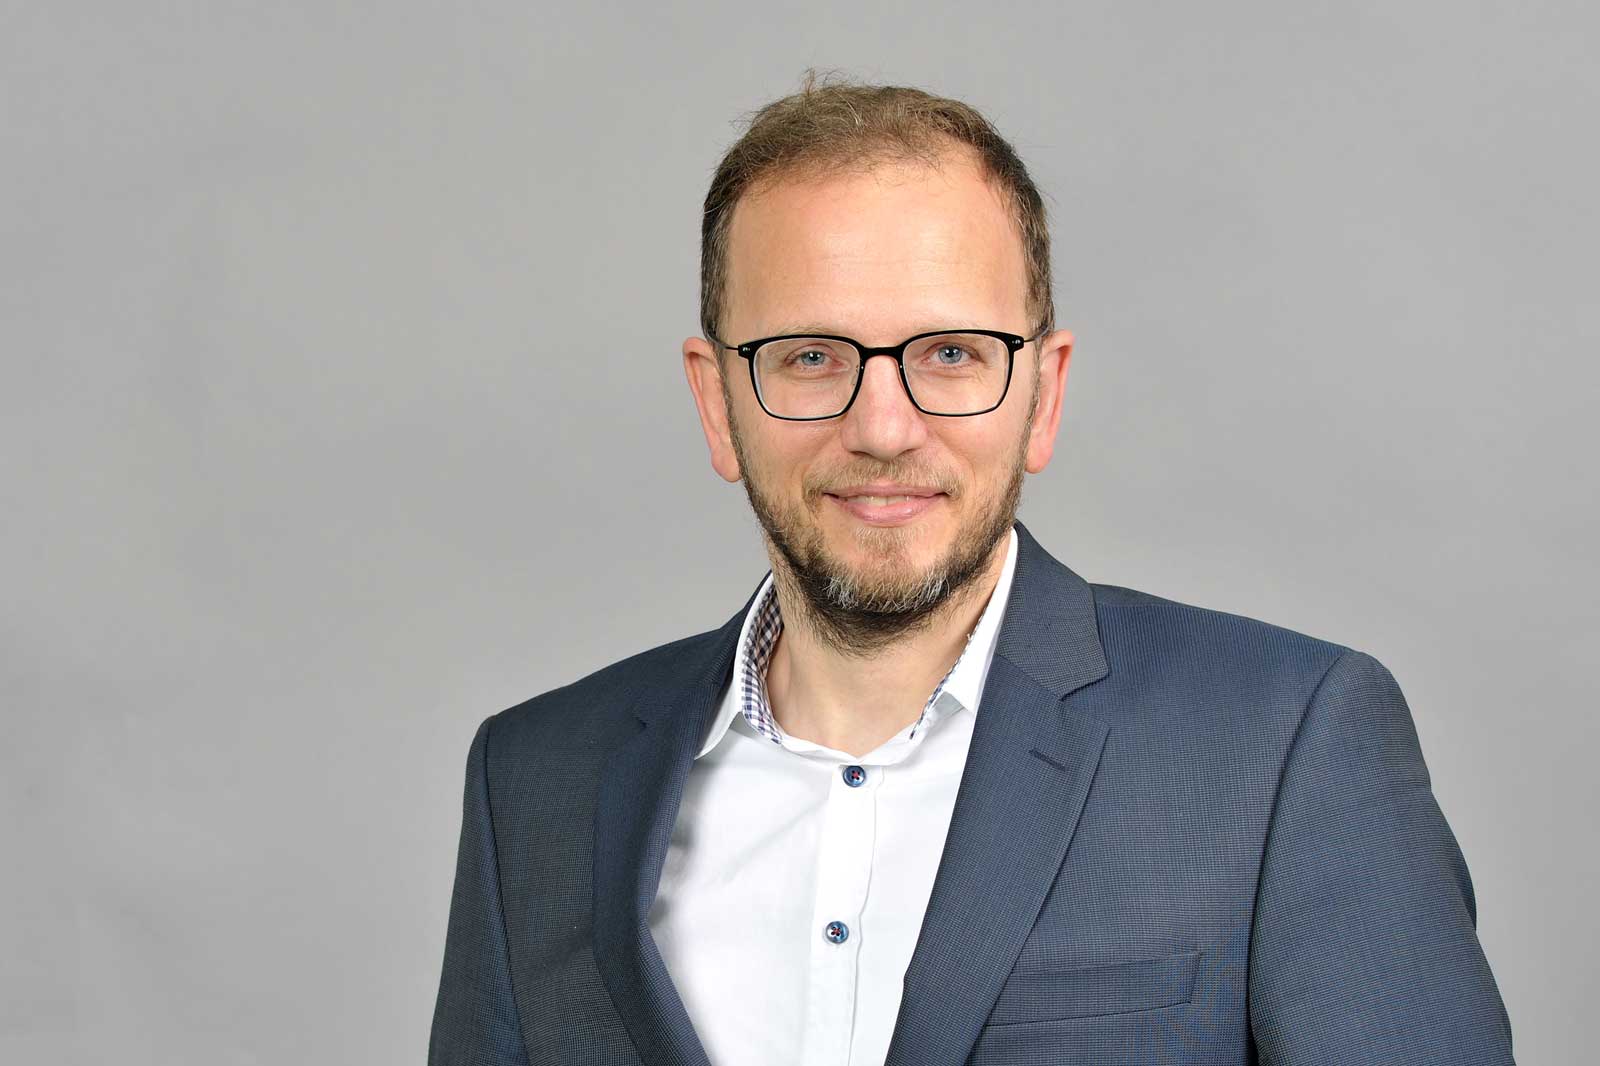 Stefan Glück | Project Development Manager @ RWE Technology GmbH